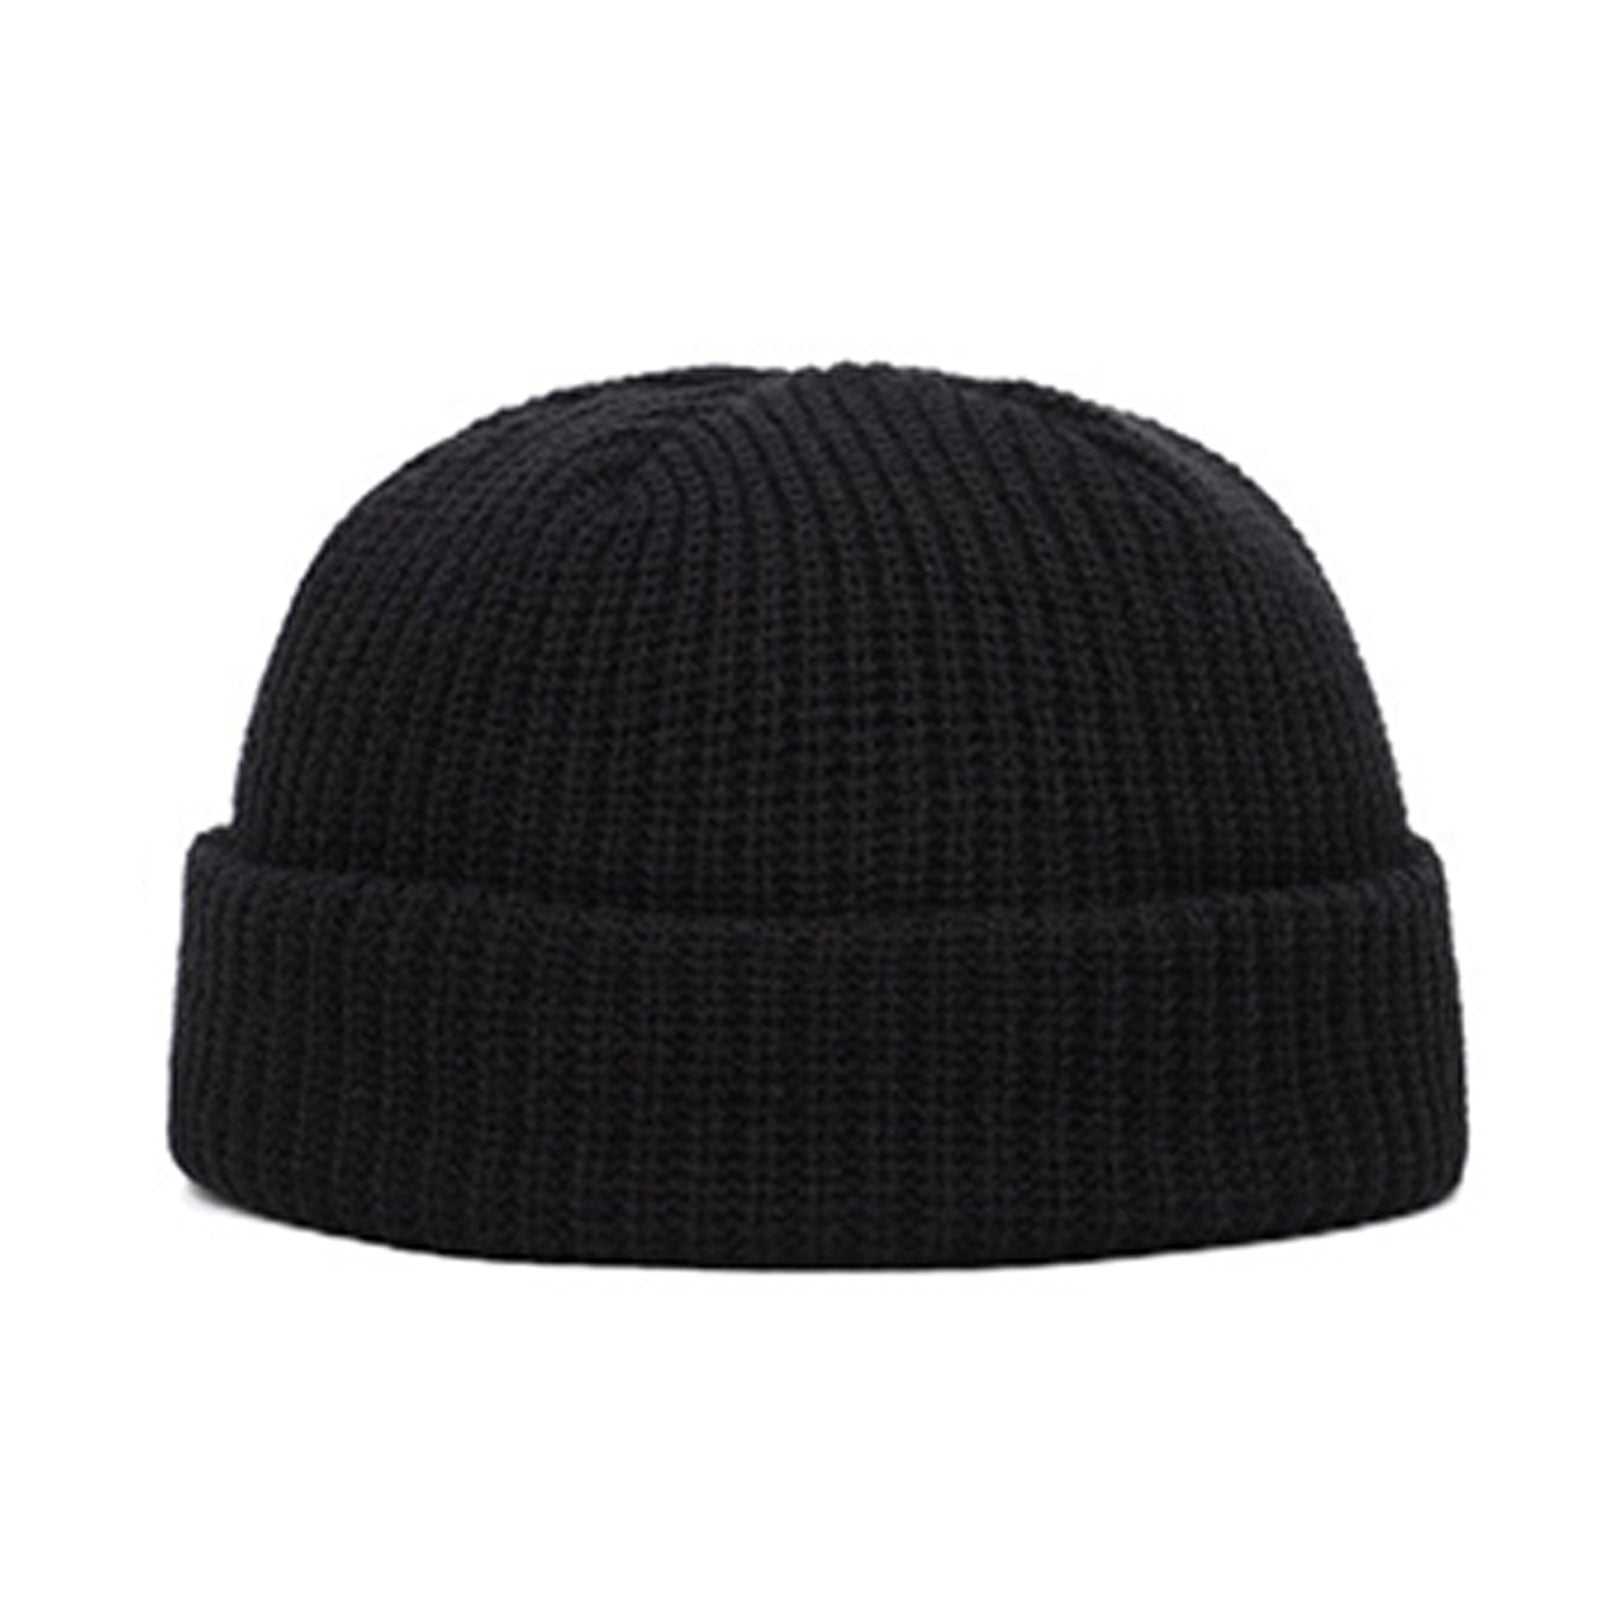 Nskngr Cap Unisex Cuffed Warm Knit Hat Cap Winter Hats